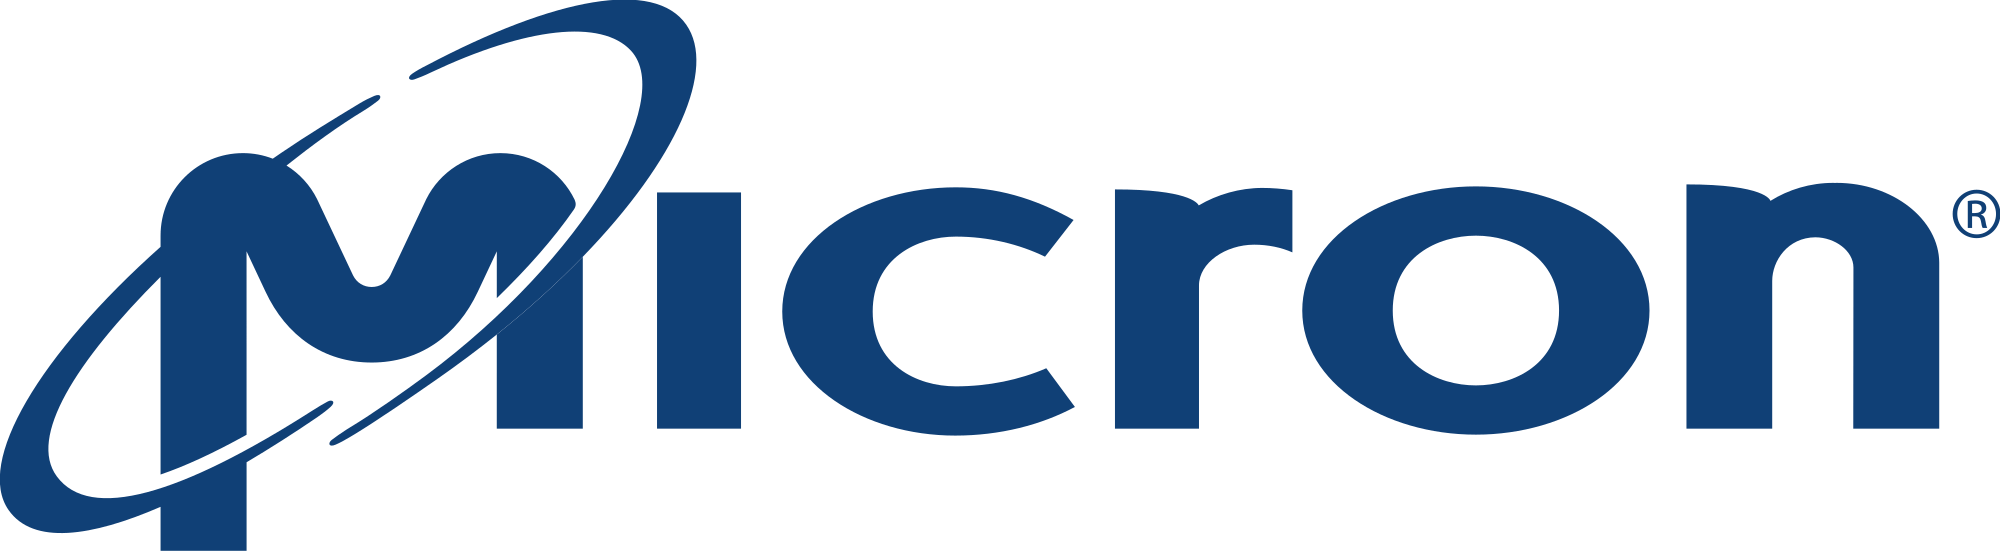 Micron Technology Logo - Micron Technology Shares Jump On $10B Share Repurchase & Intel Deal ...